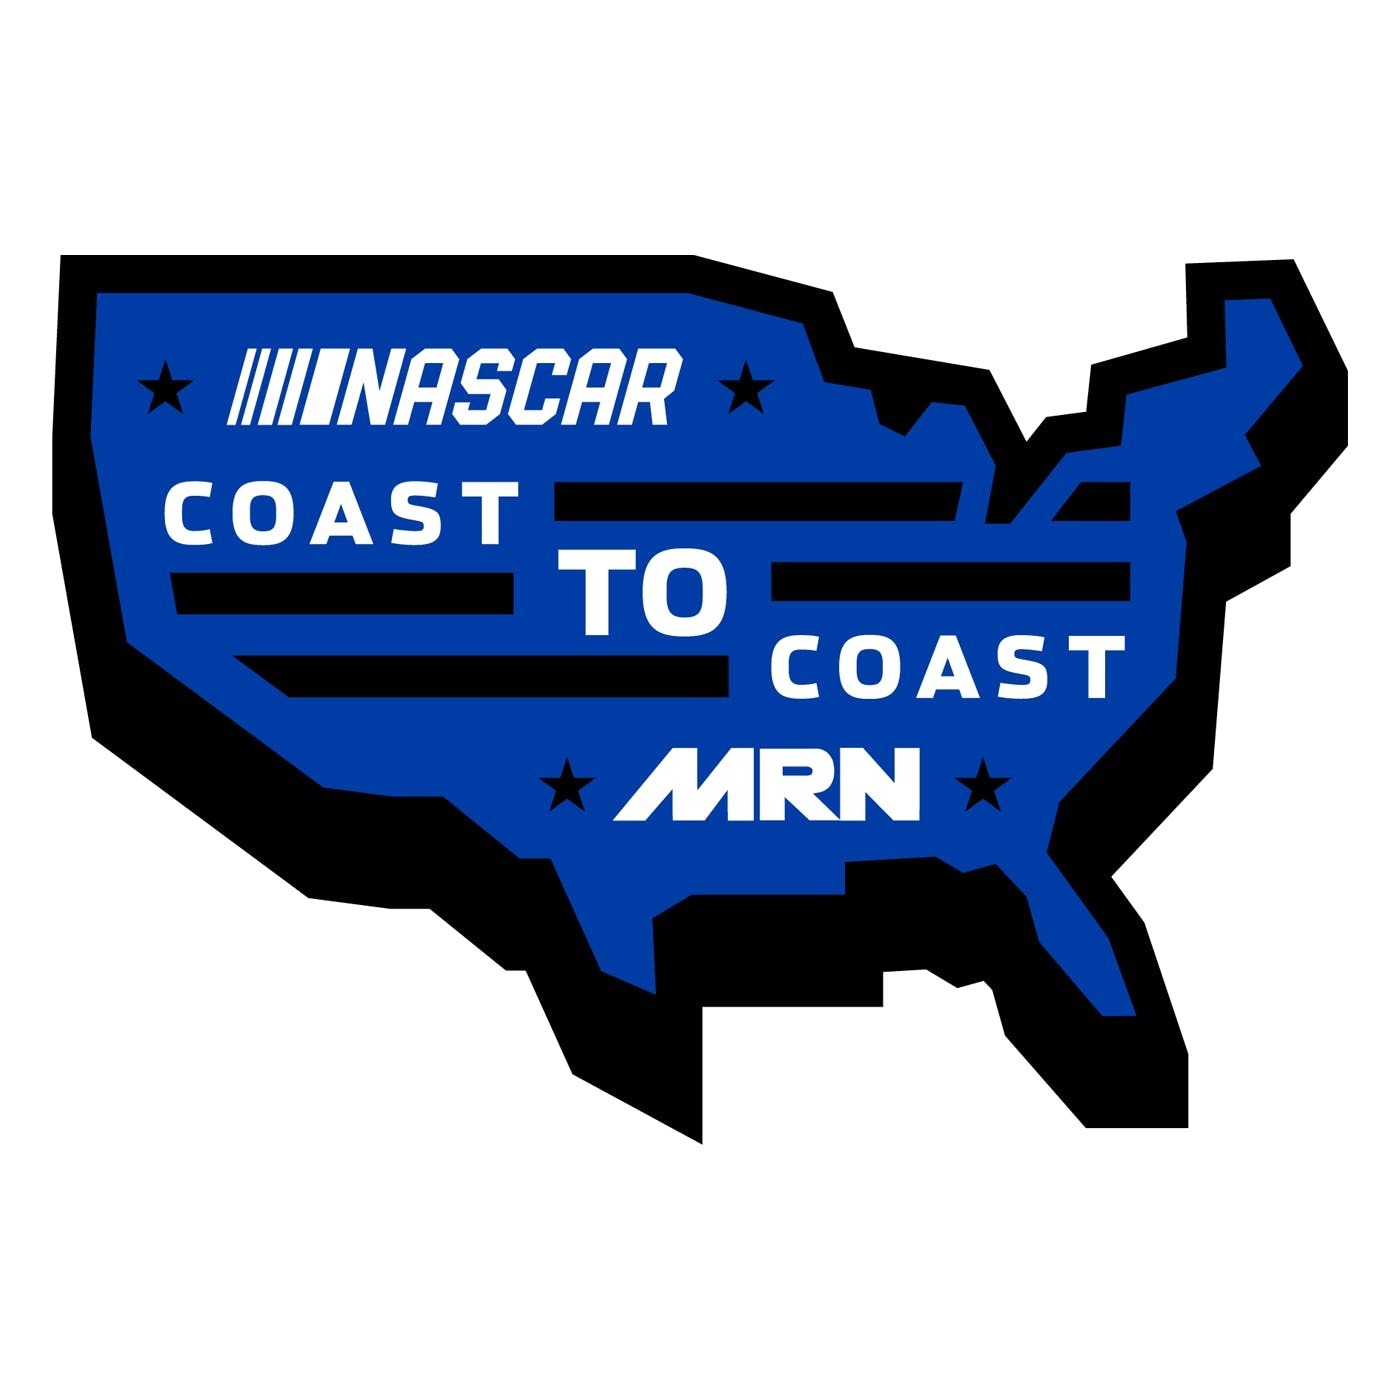 NASCAR Coast to Coast - iRacing